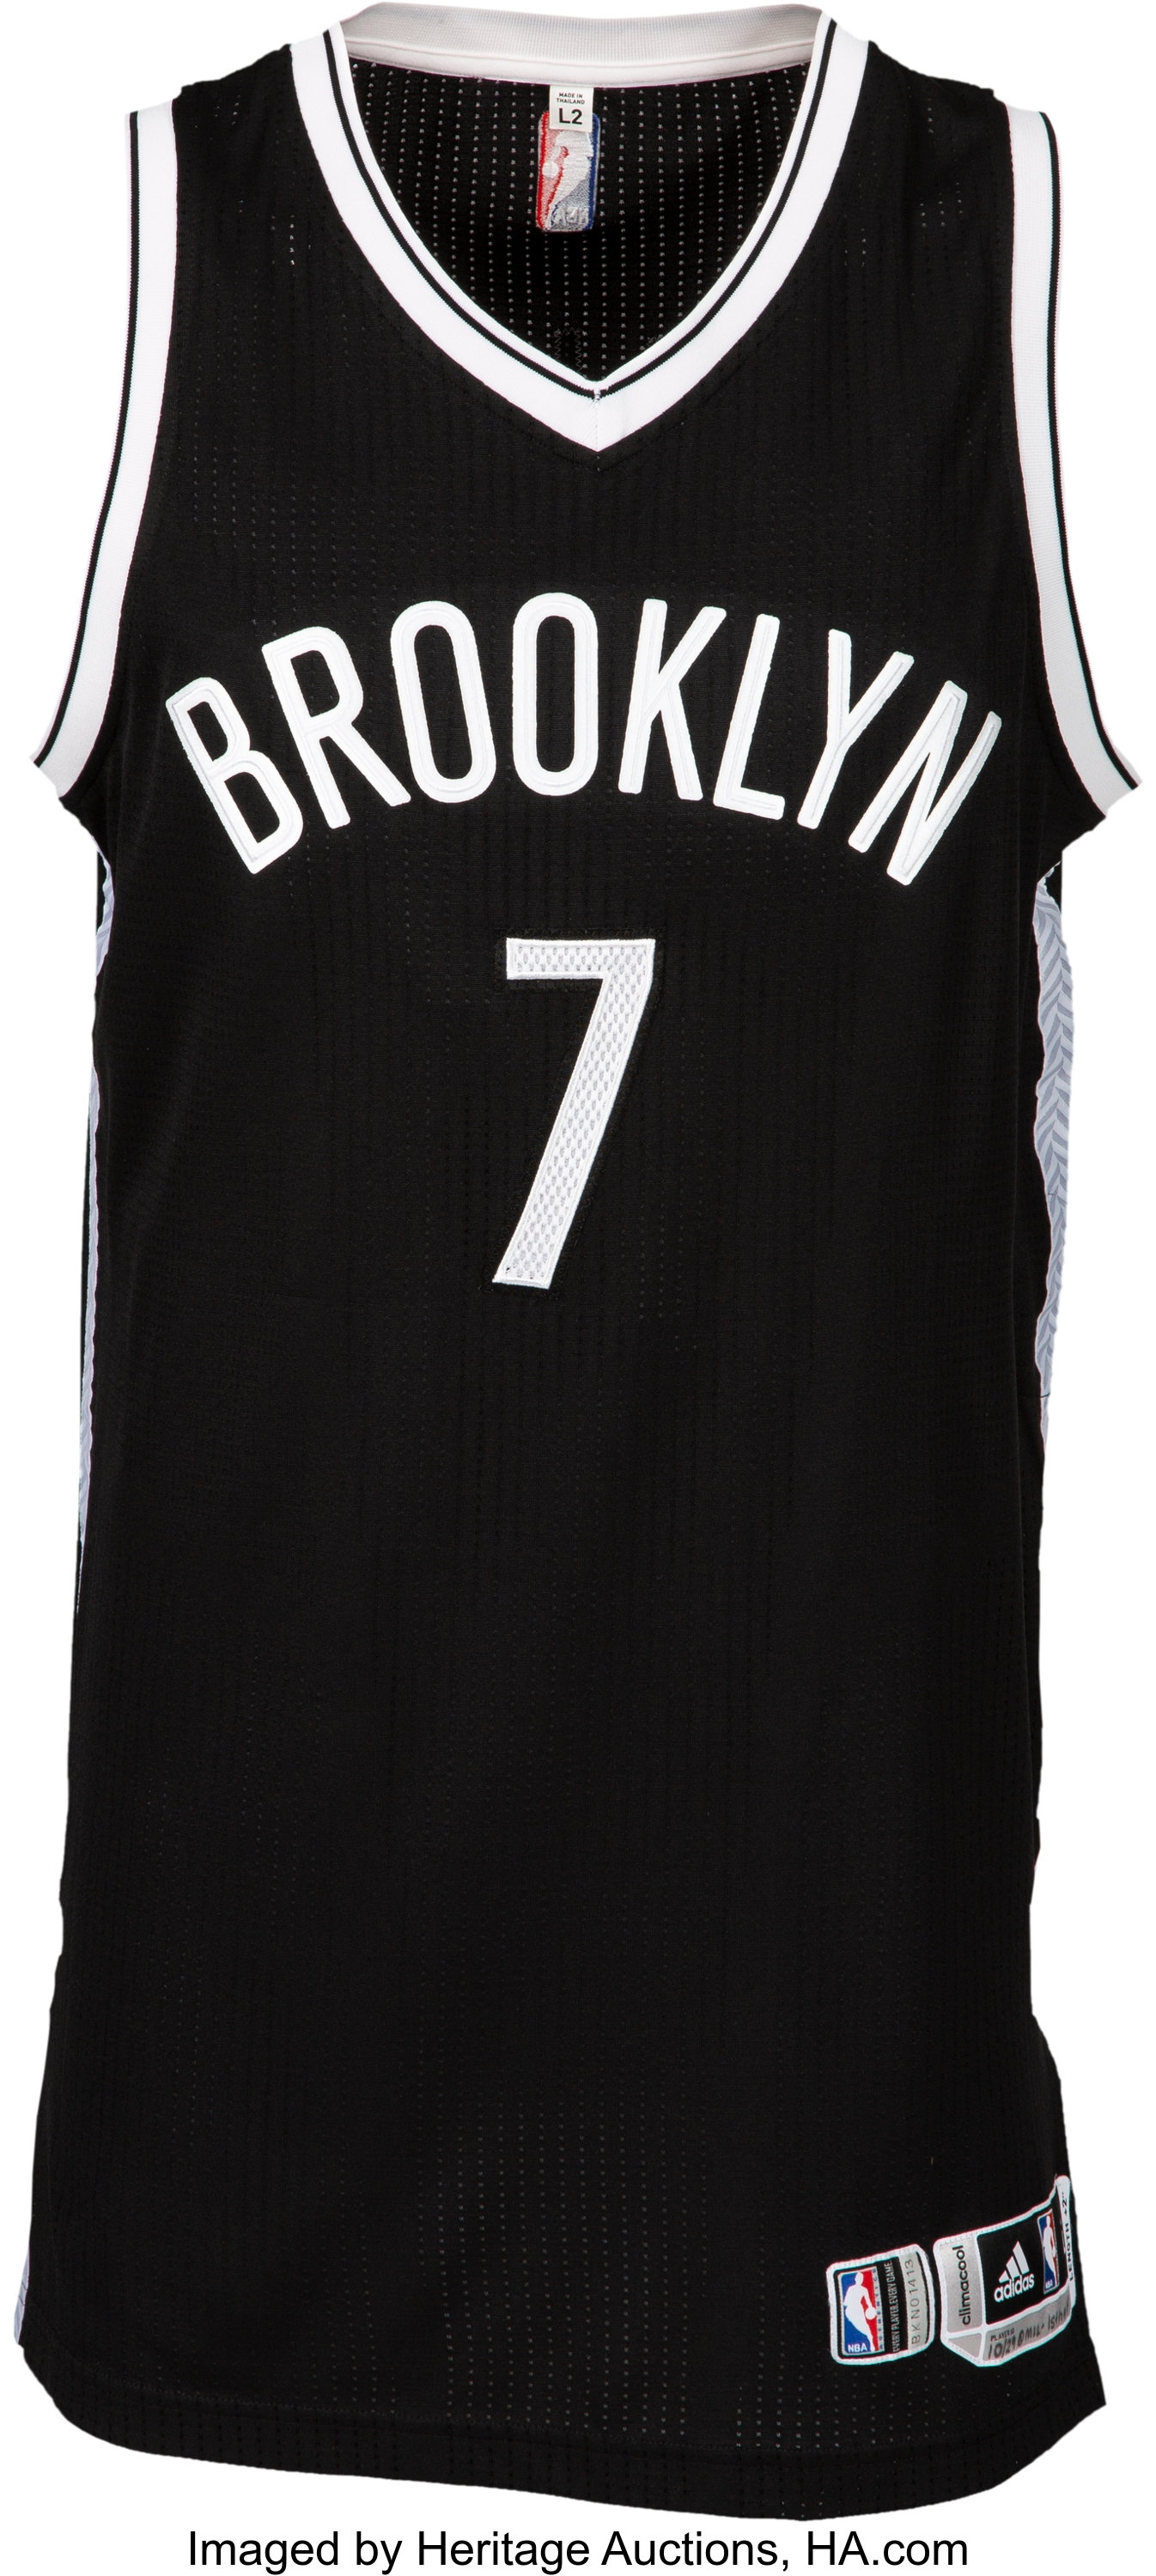 Brooklyn Nets Sign Jeremy Lin